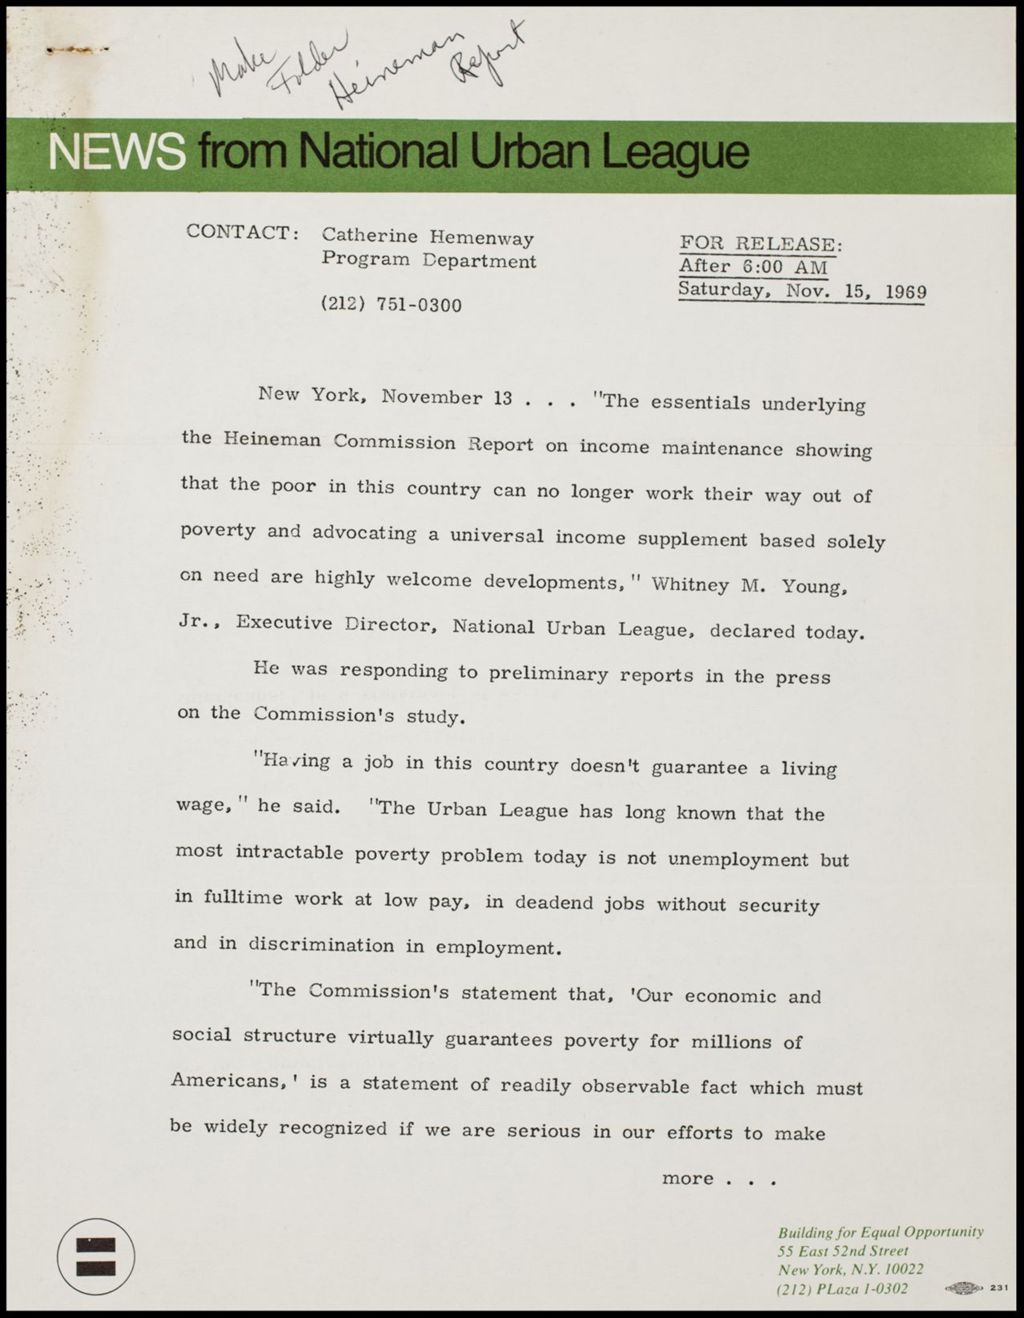 Miniature of National Urban League press release, 1969 (Folder I-2996)